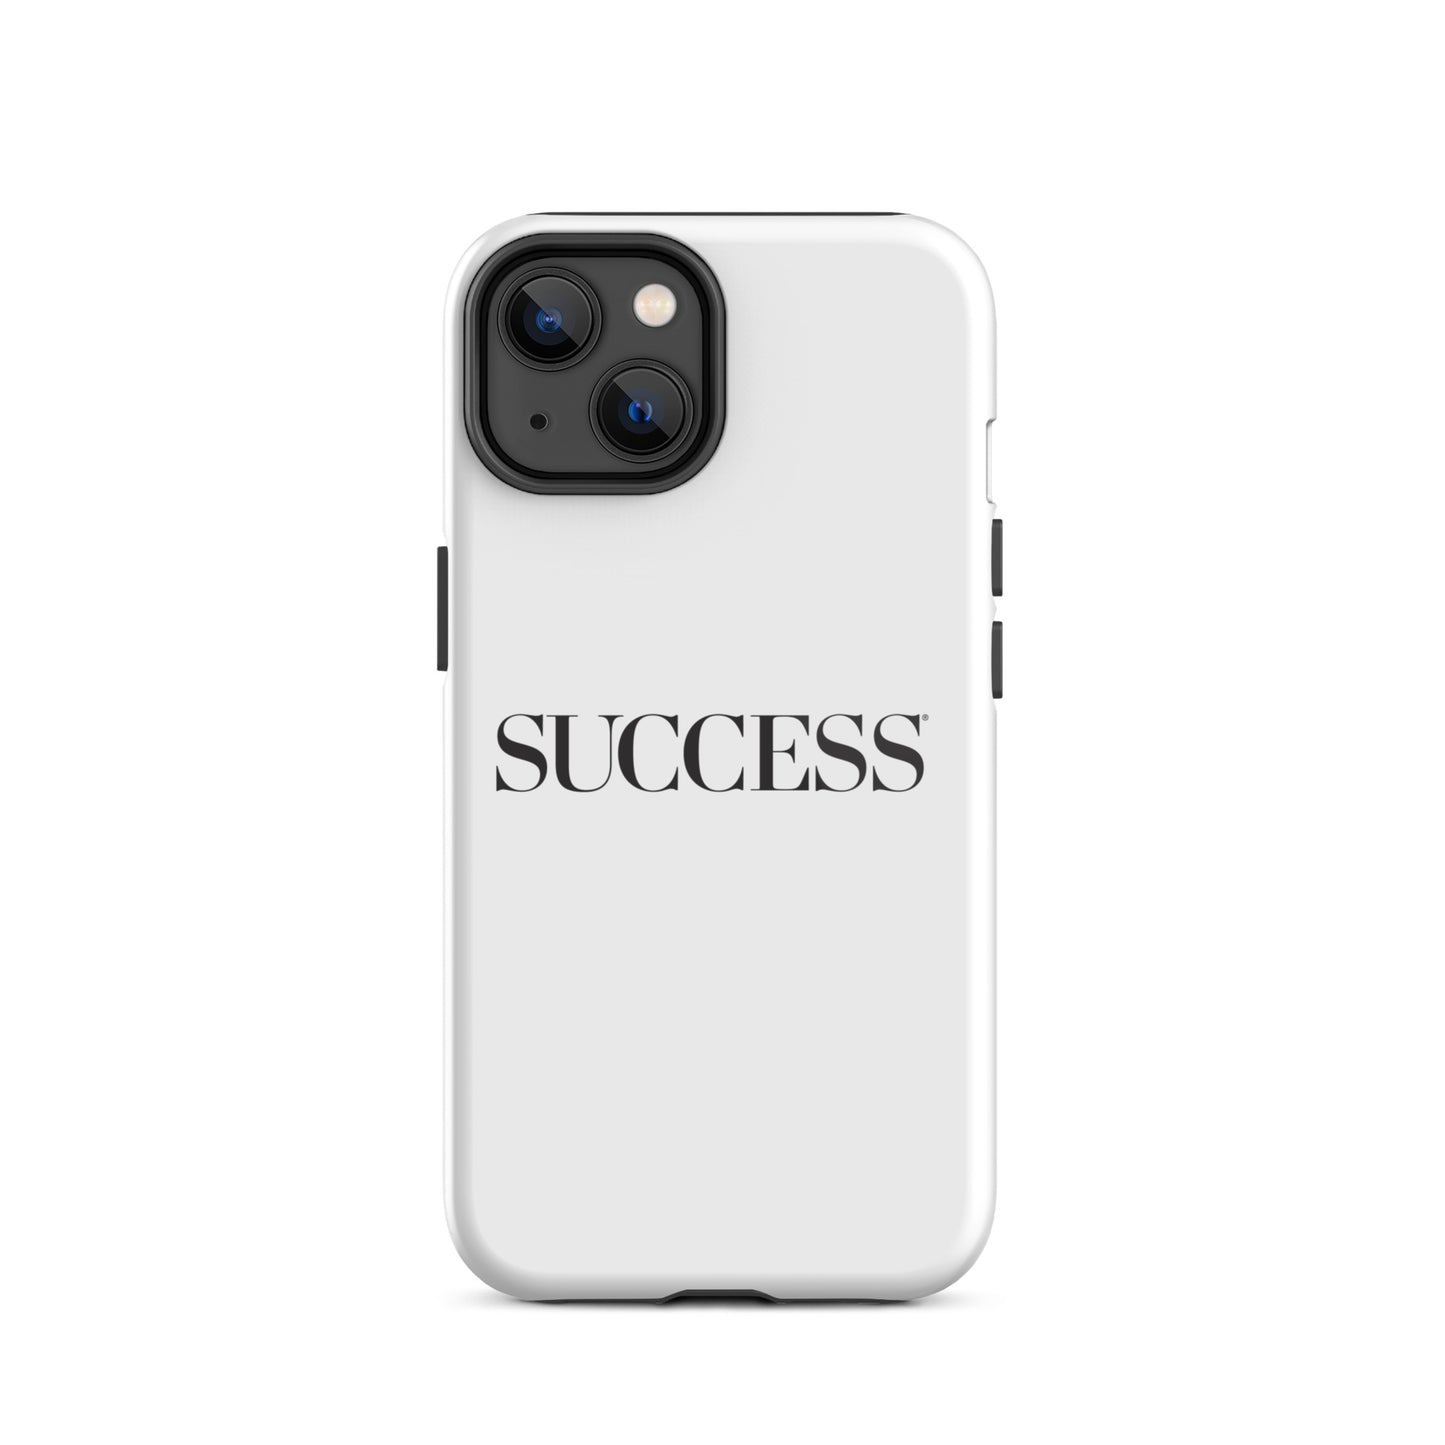 SUCCESS-logo Tough iPhone case